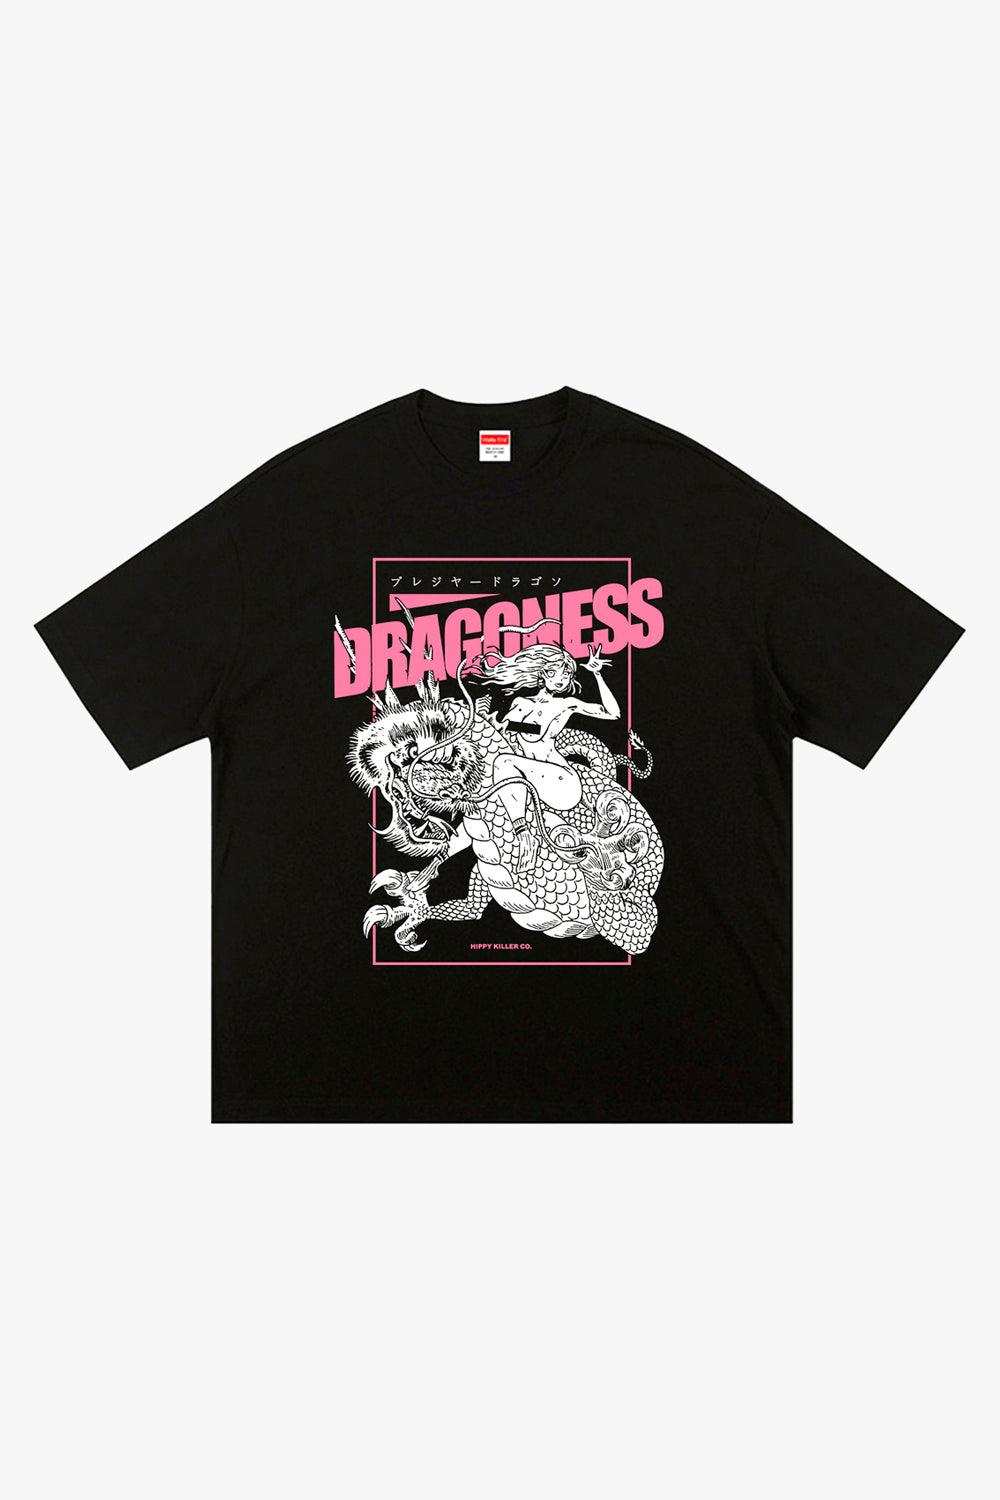 Dragoness Retro Anime T-Shirt - Aesthetic Clothes Shop